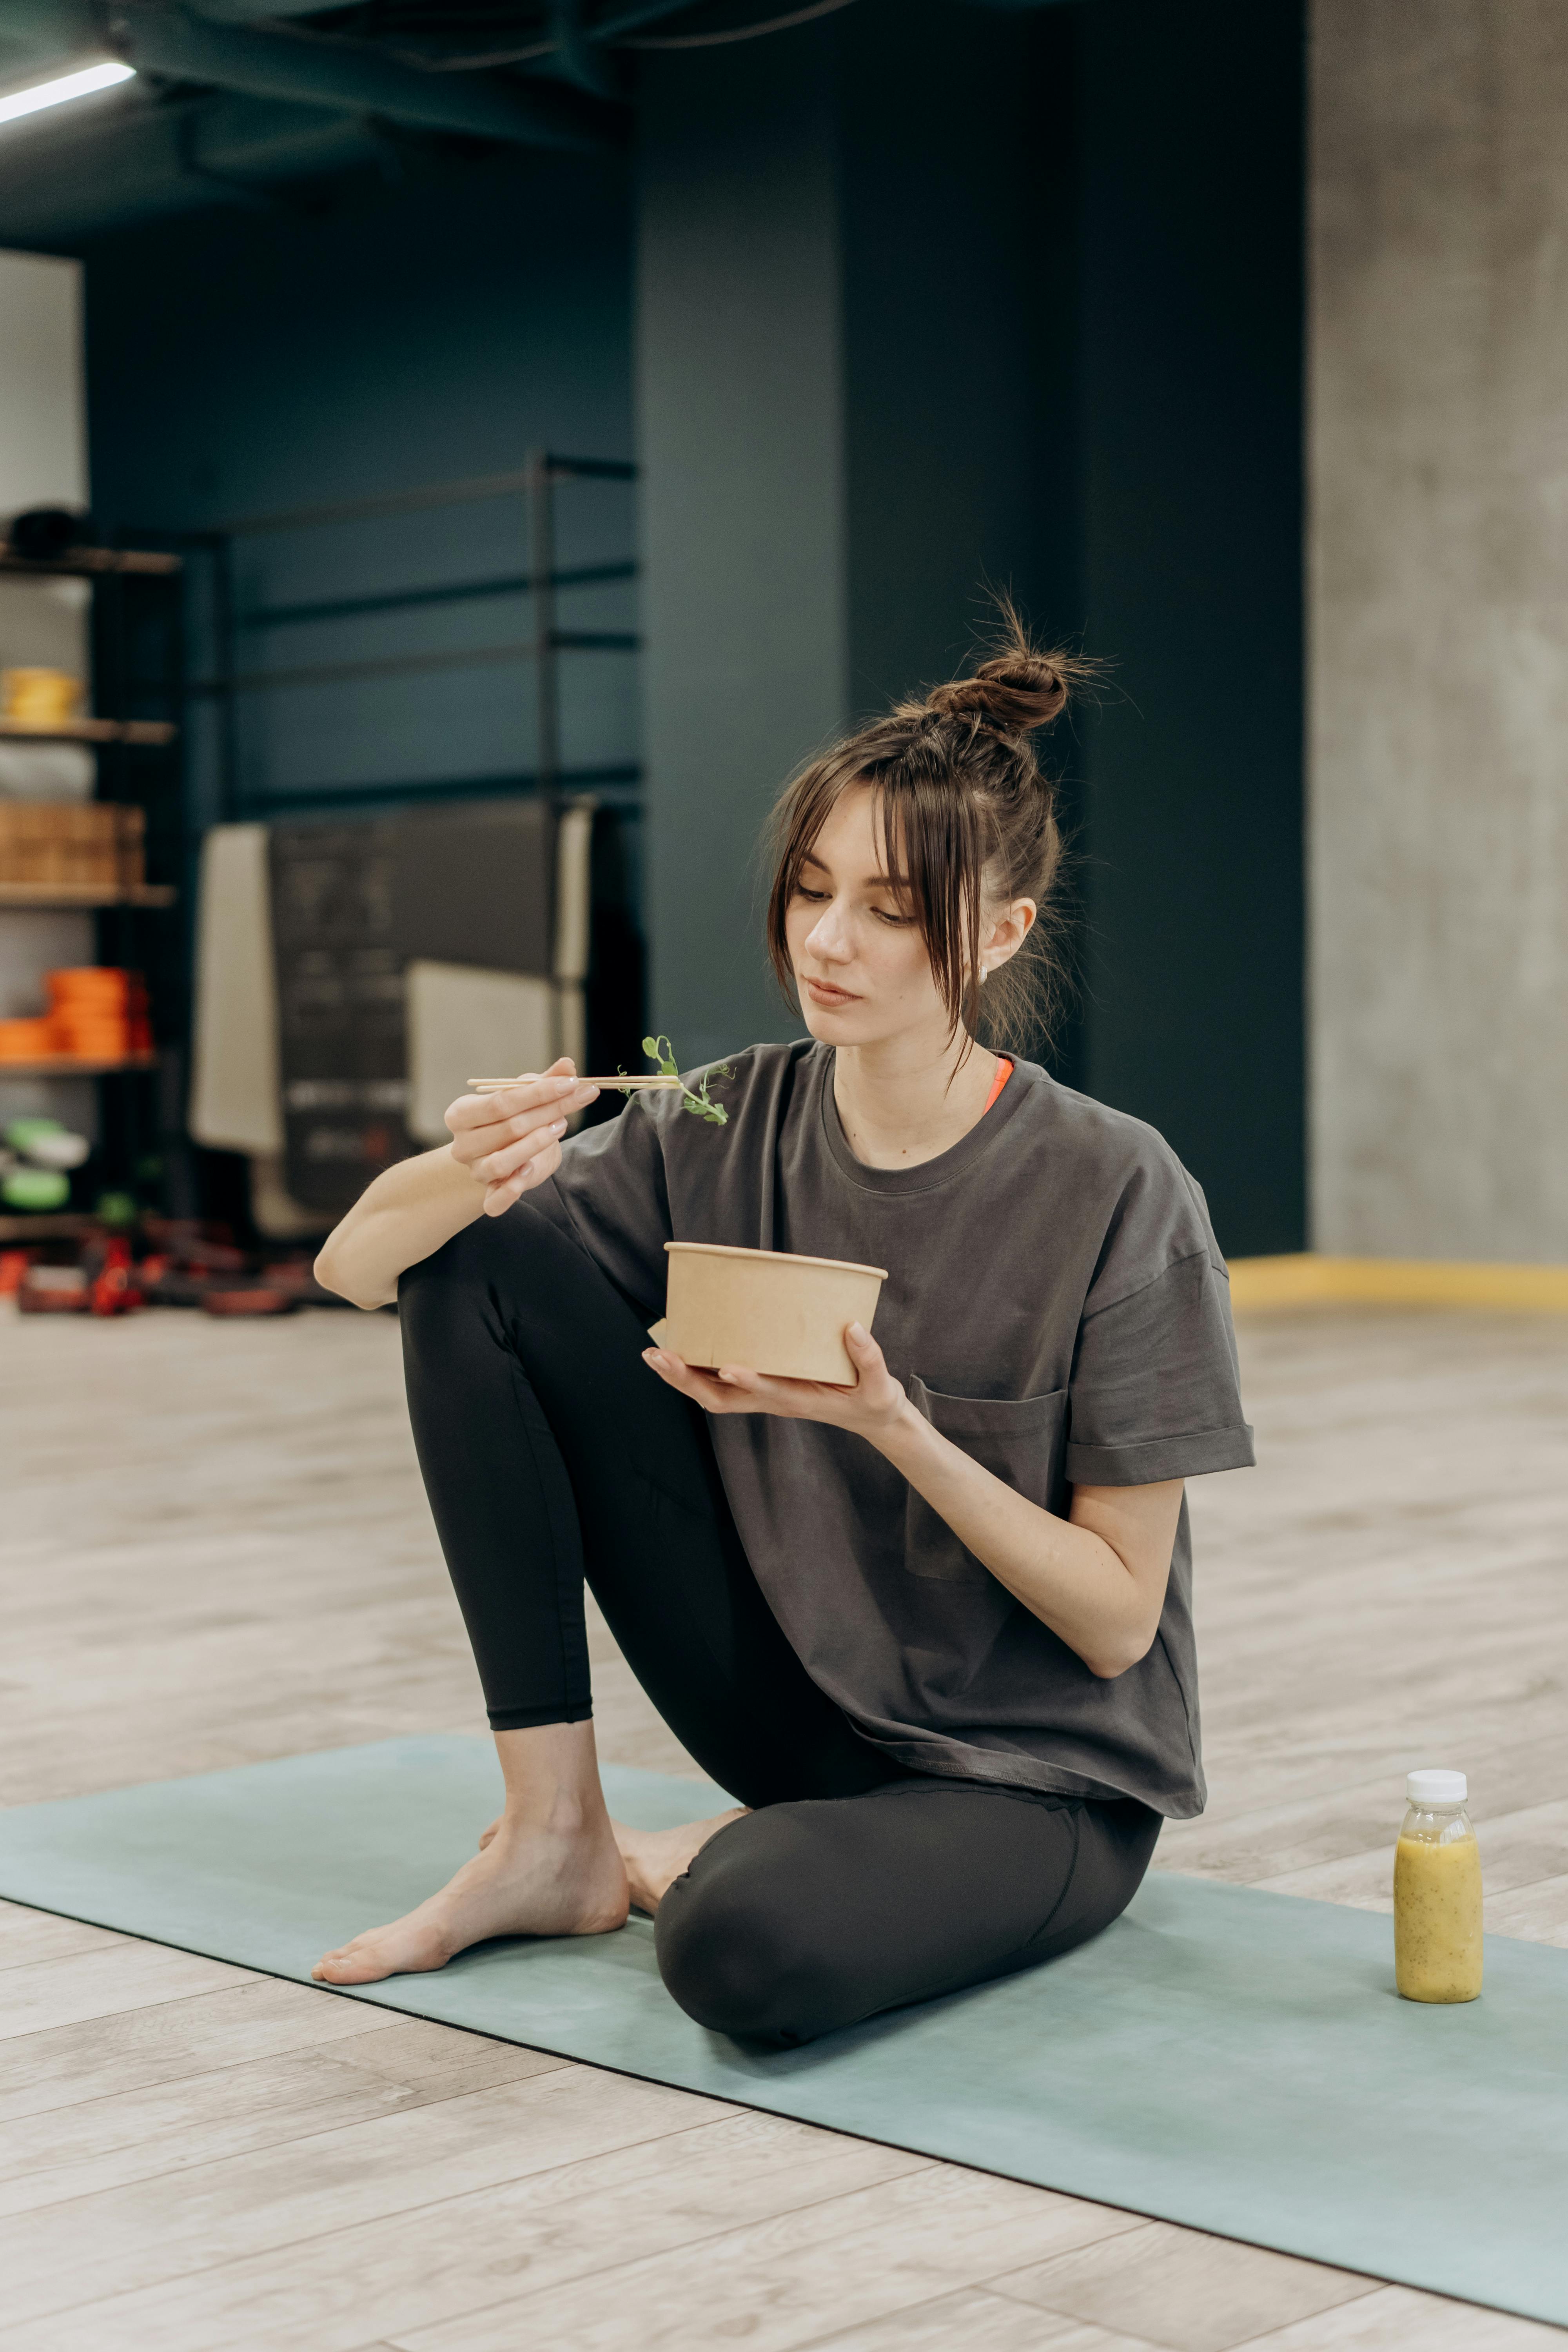 Woman in Gray T-shirt and Black Leggings Sitting on Blue Yoga Mat